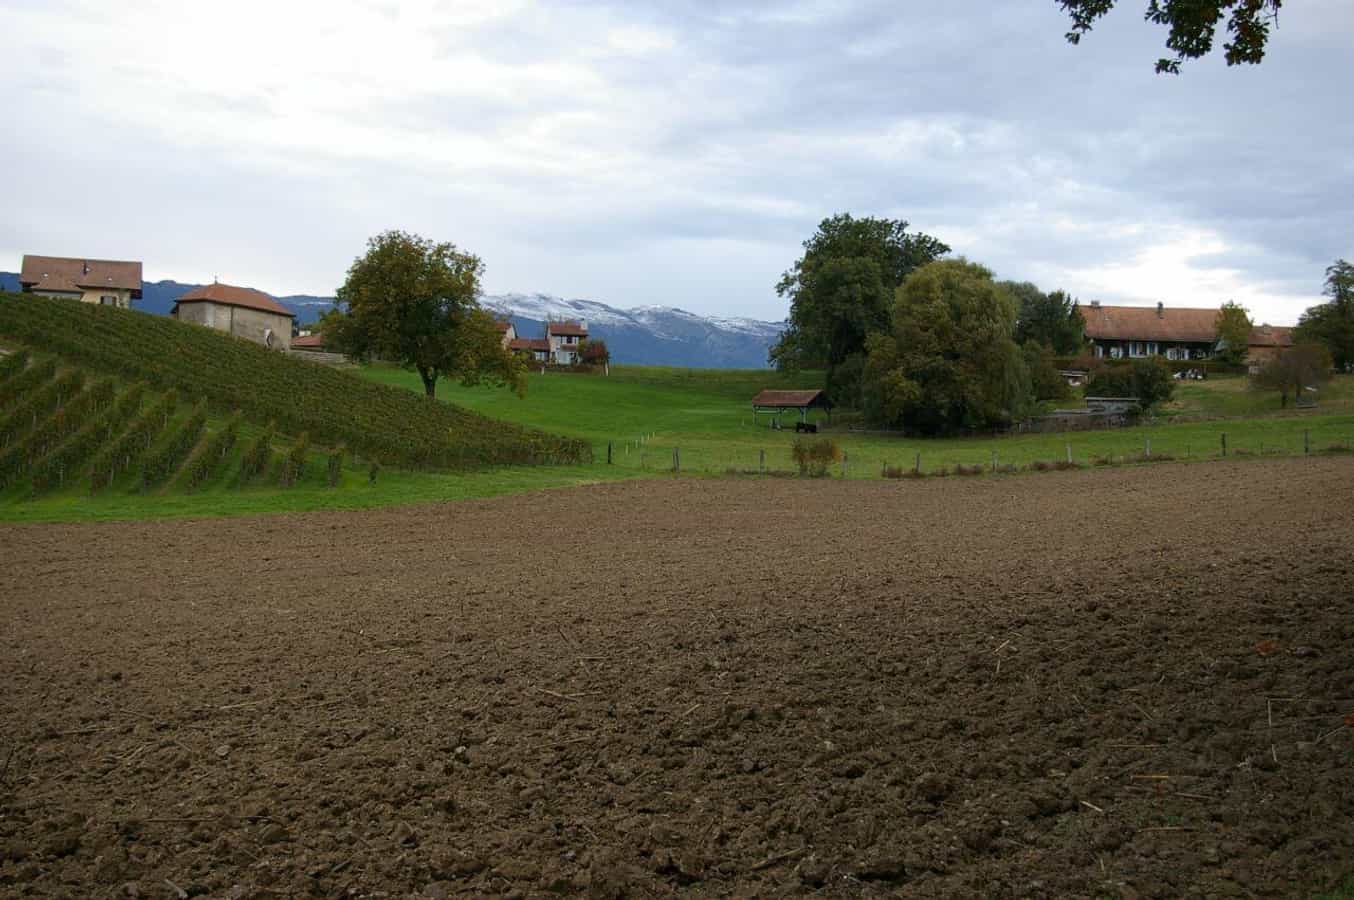 Landscape of the Geneva countryside in Avusy